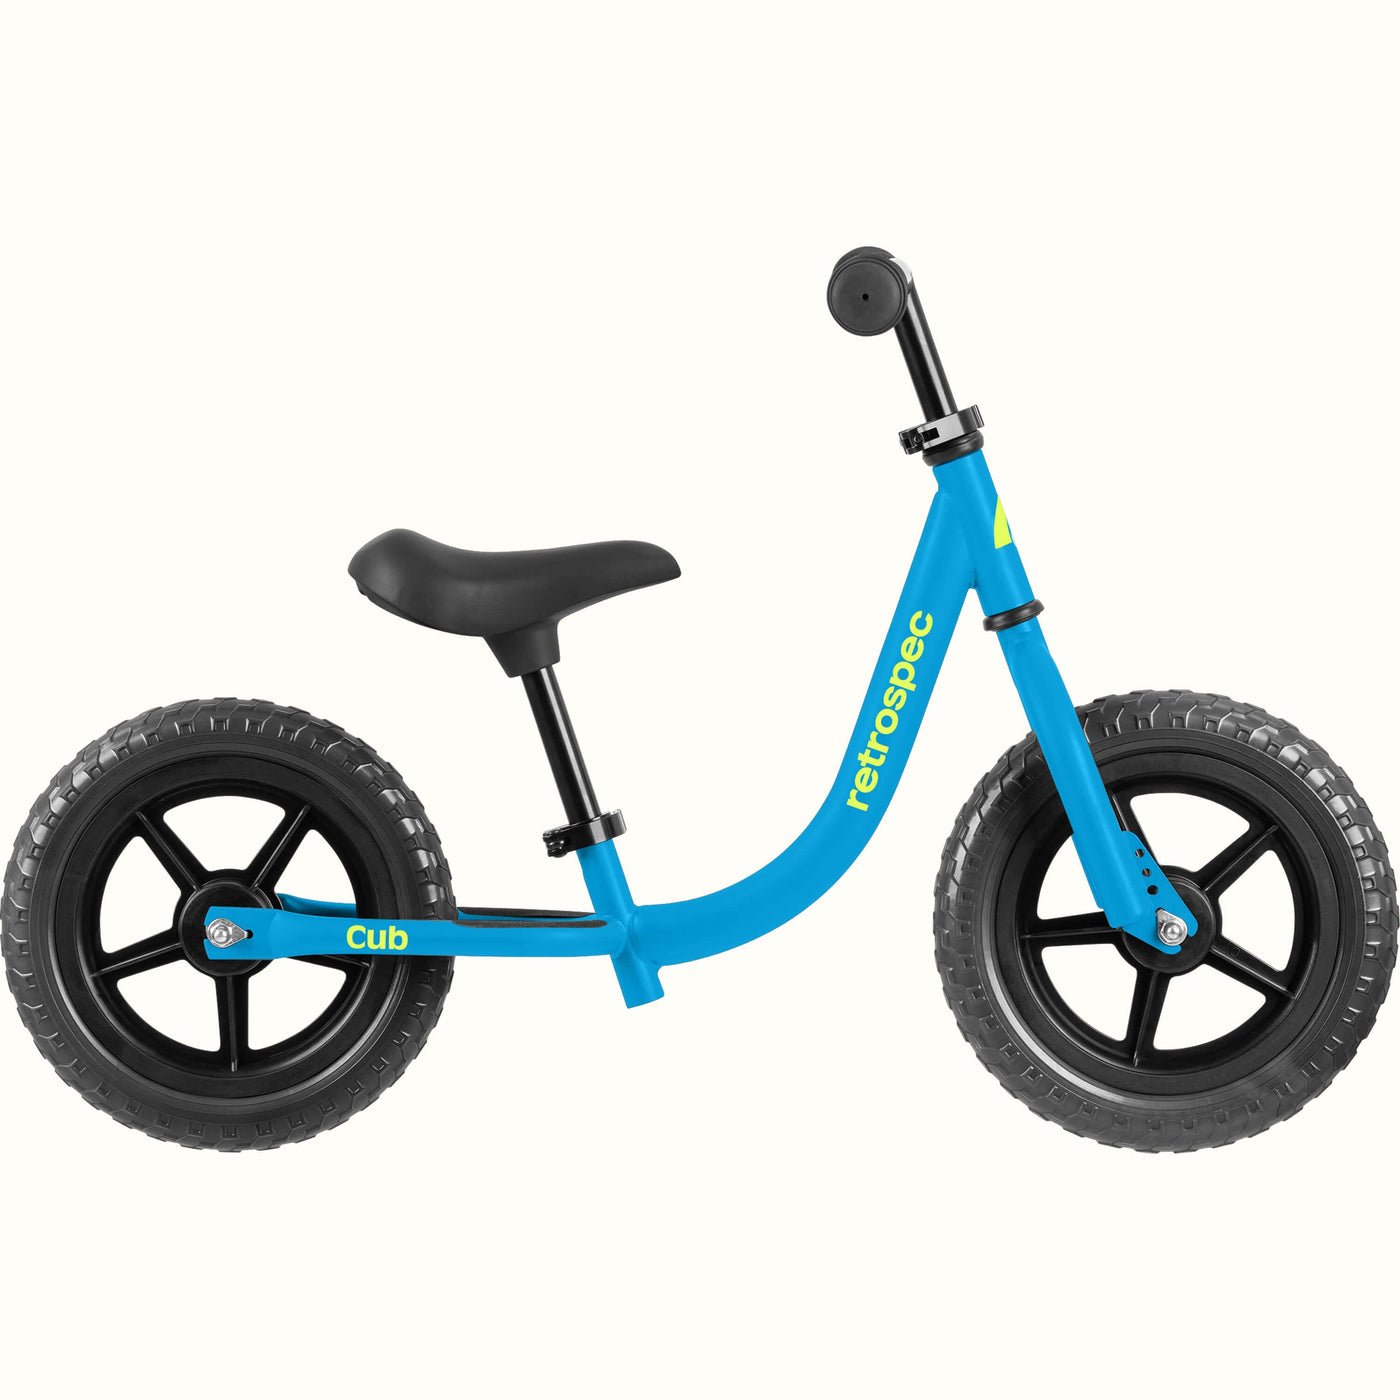 Cub 2 Kids’ Balance Bike (18 months-4 years) | Brash Blue